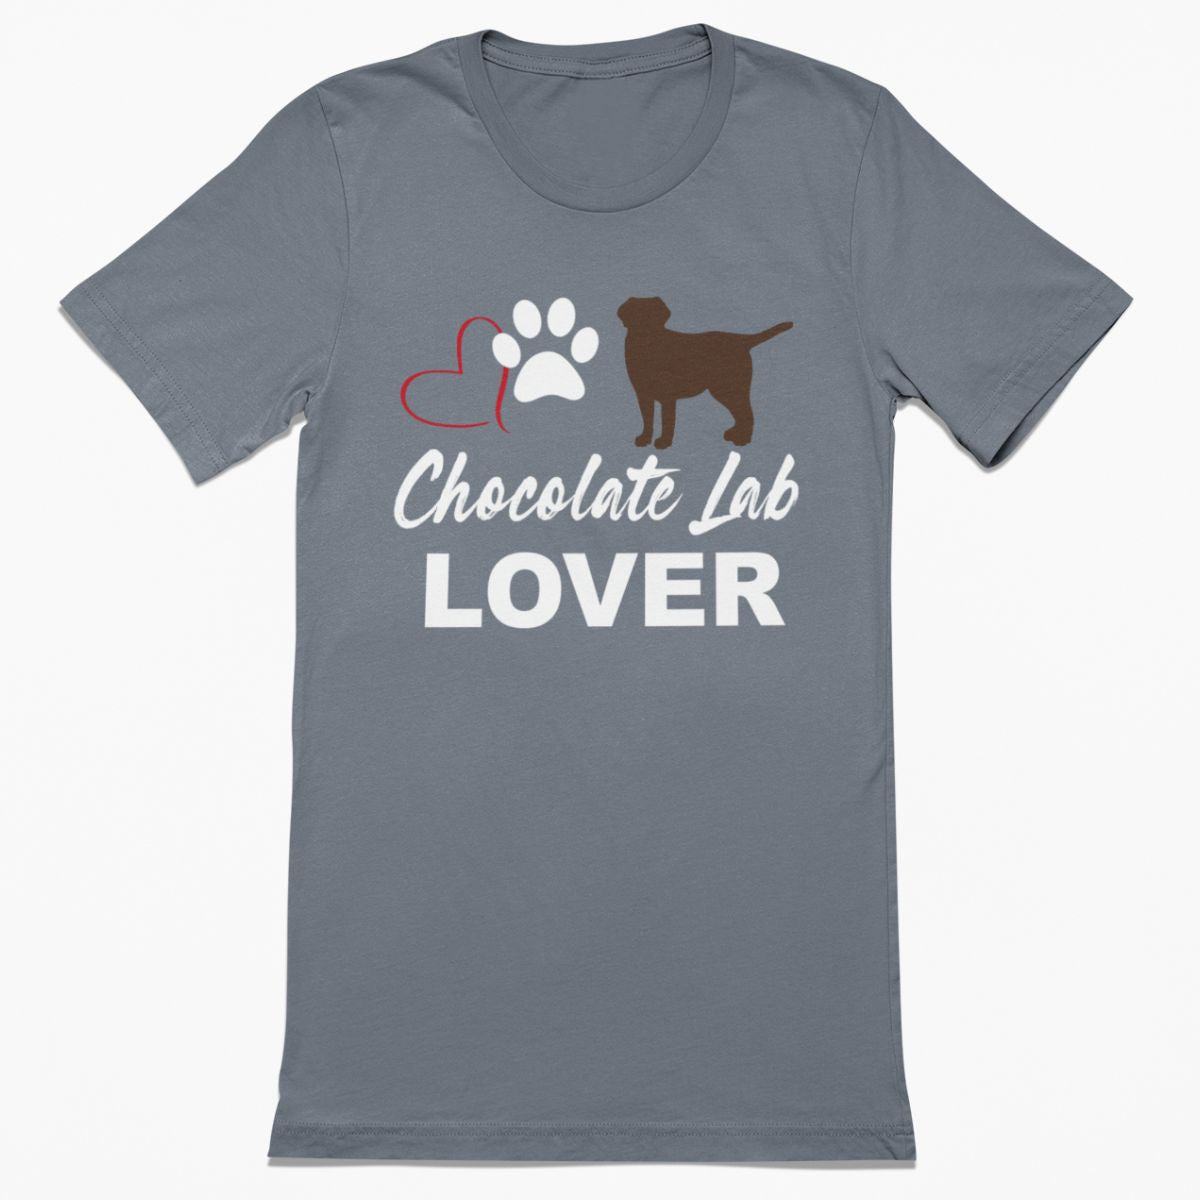 Chocolate Lab Lover Shirt